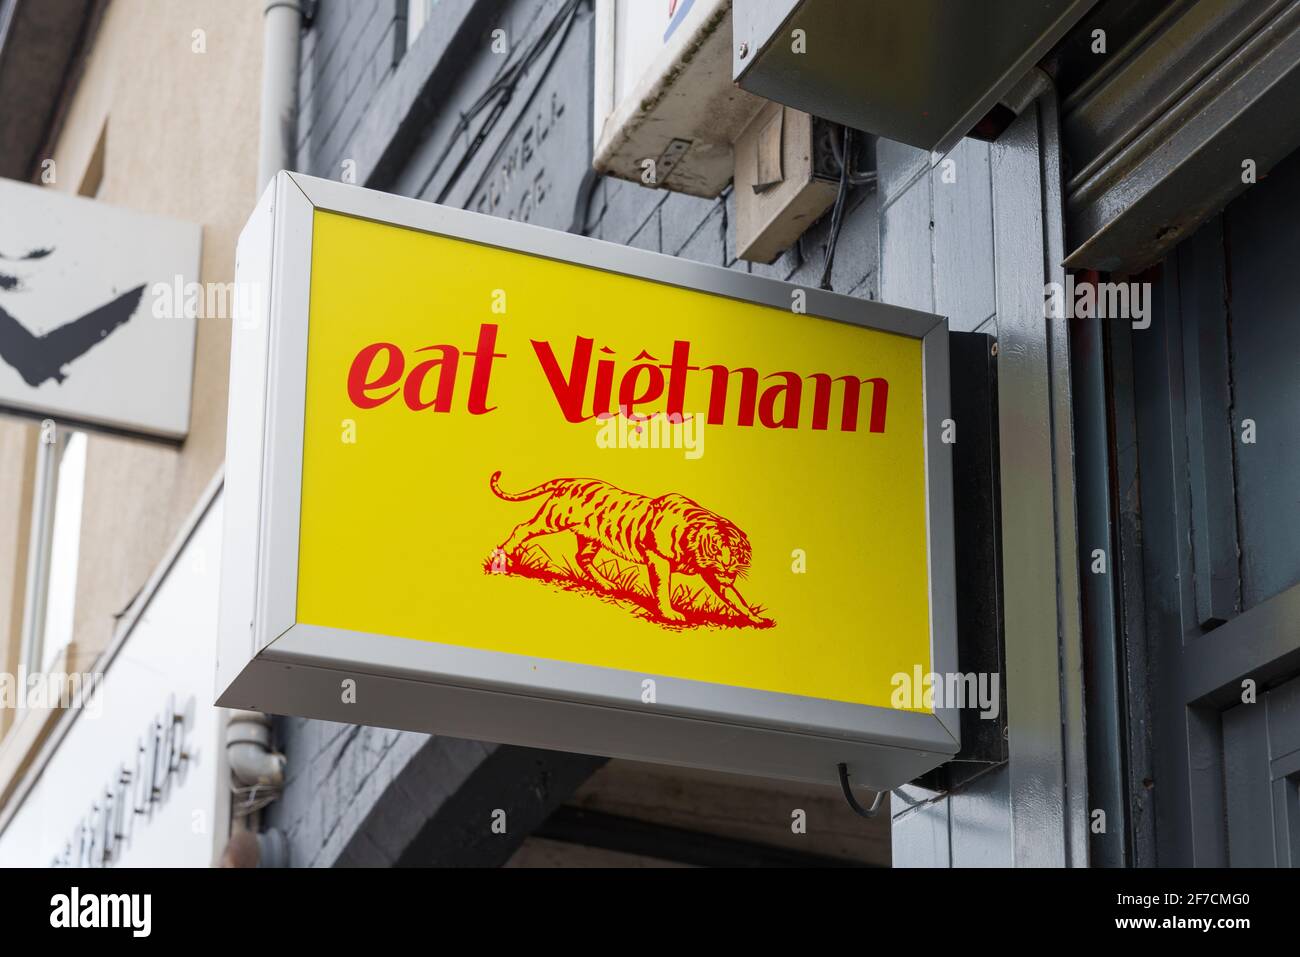 Eat Vietnam is a Vietnamese restaurant on the Pershore Road, Stirchley, Birmingham,UK Stock Photo